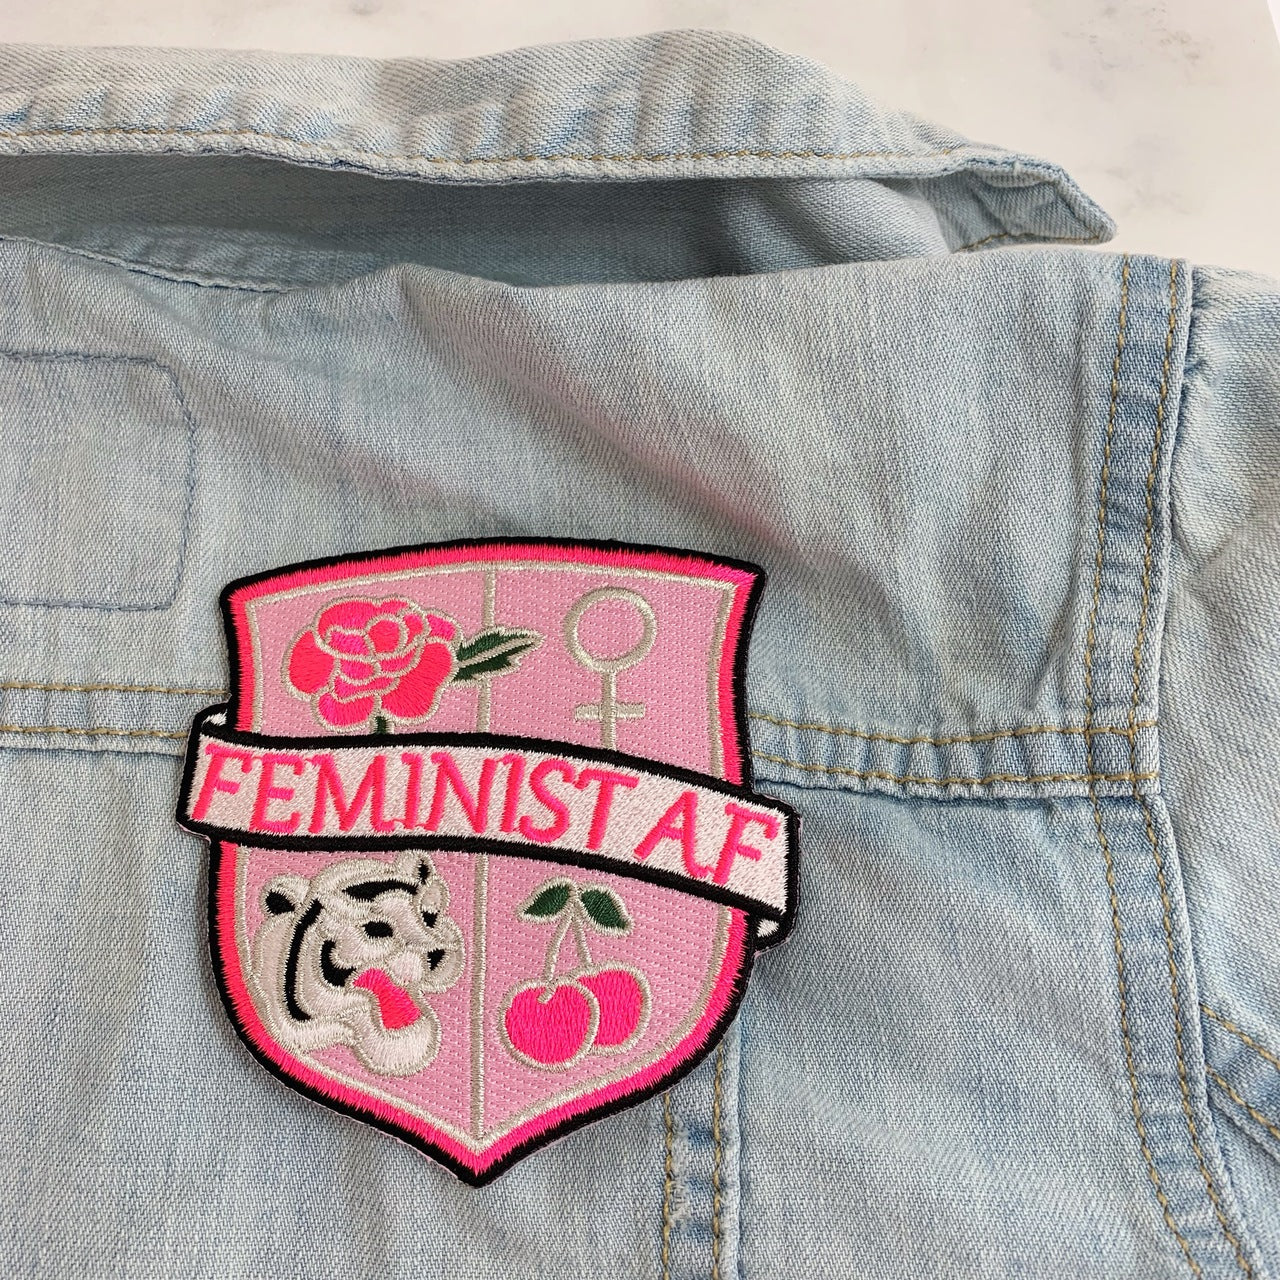 Feminist AF Pink Patch - Gold Crow Co.